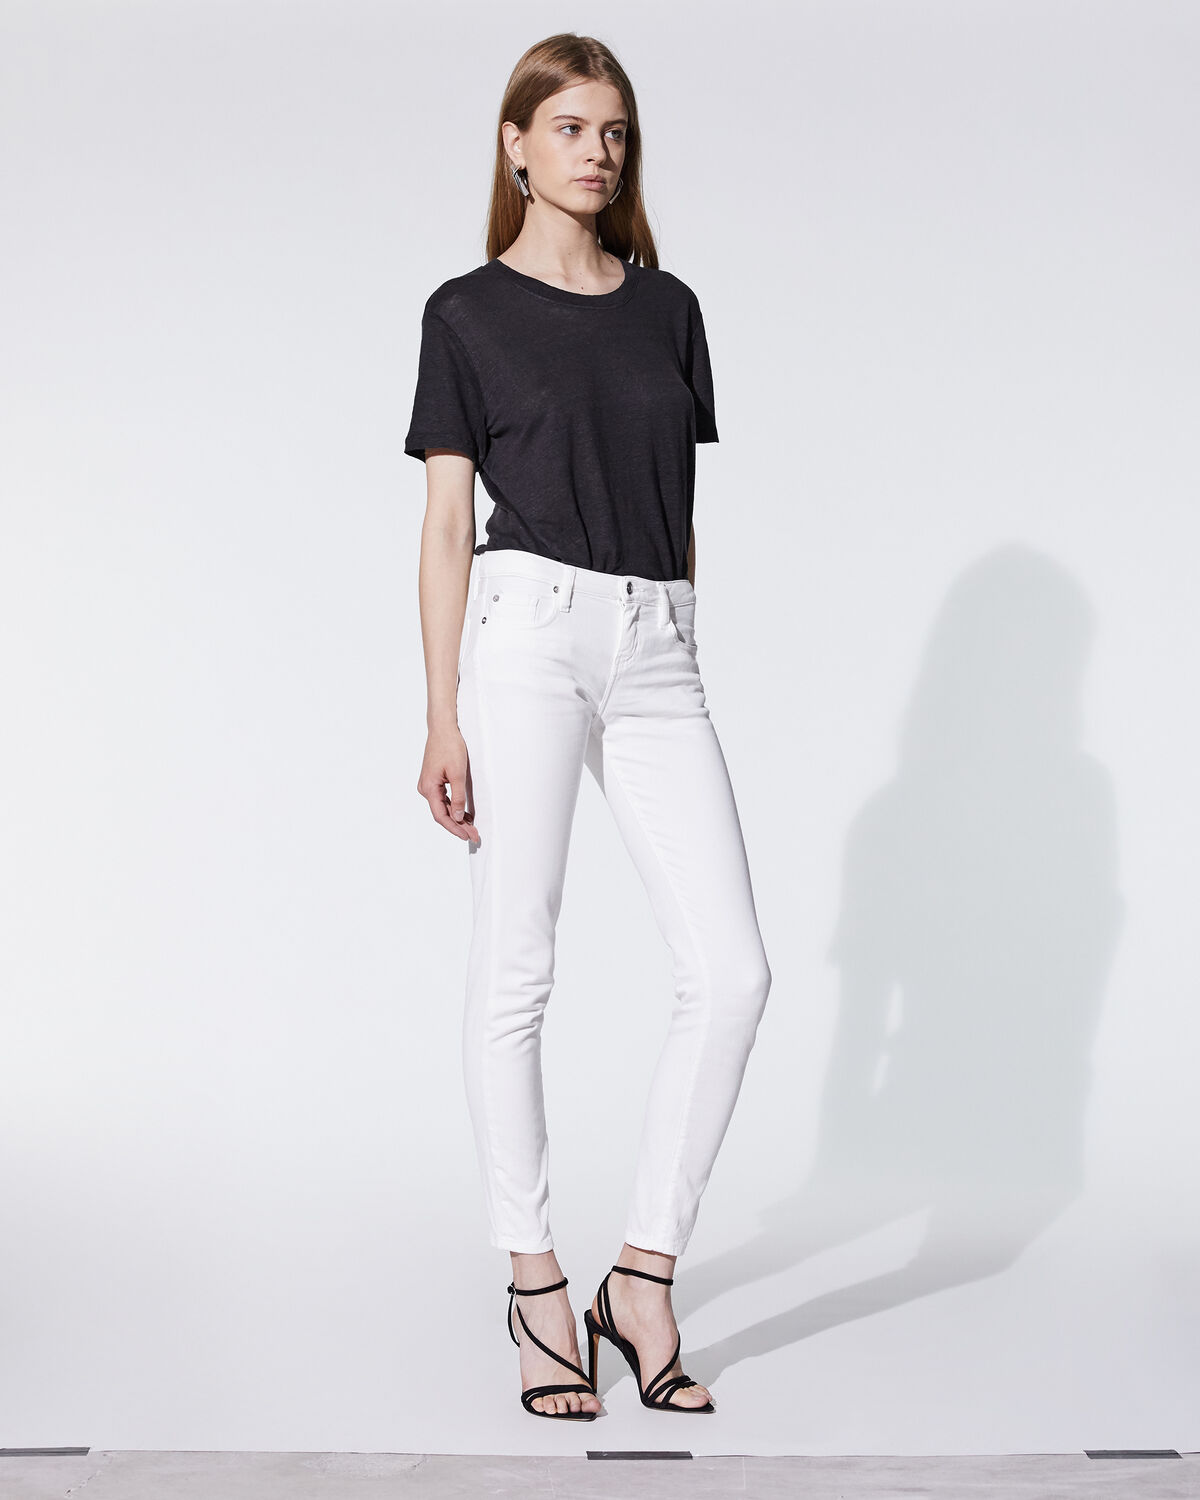 Jarodcla Jeans White by IRO Paris